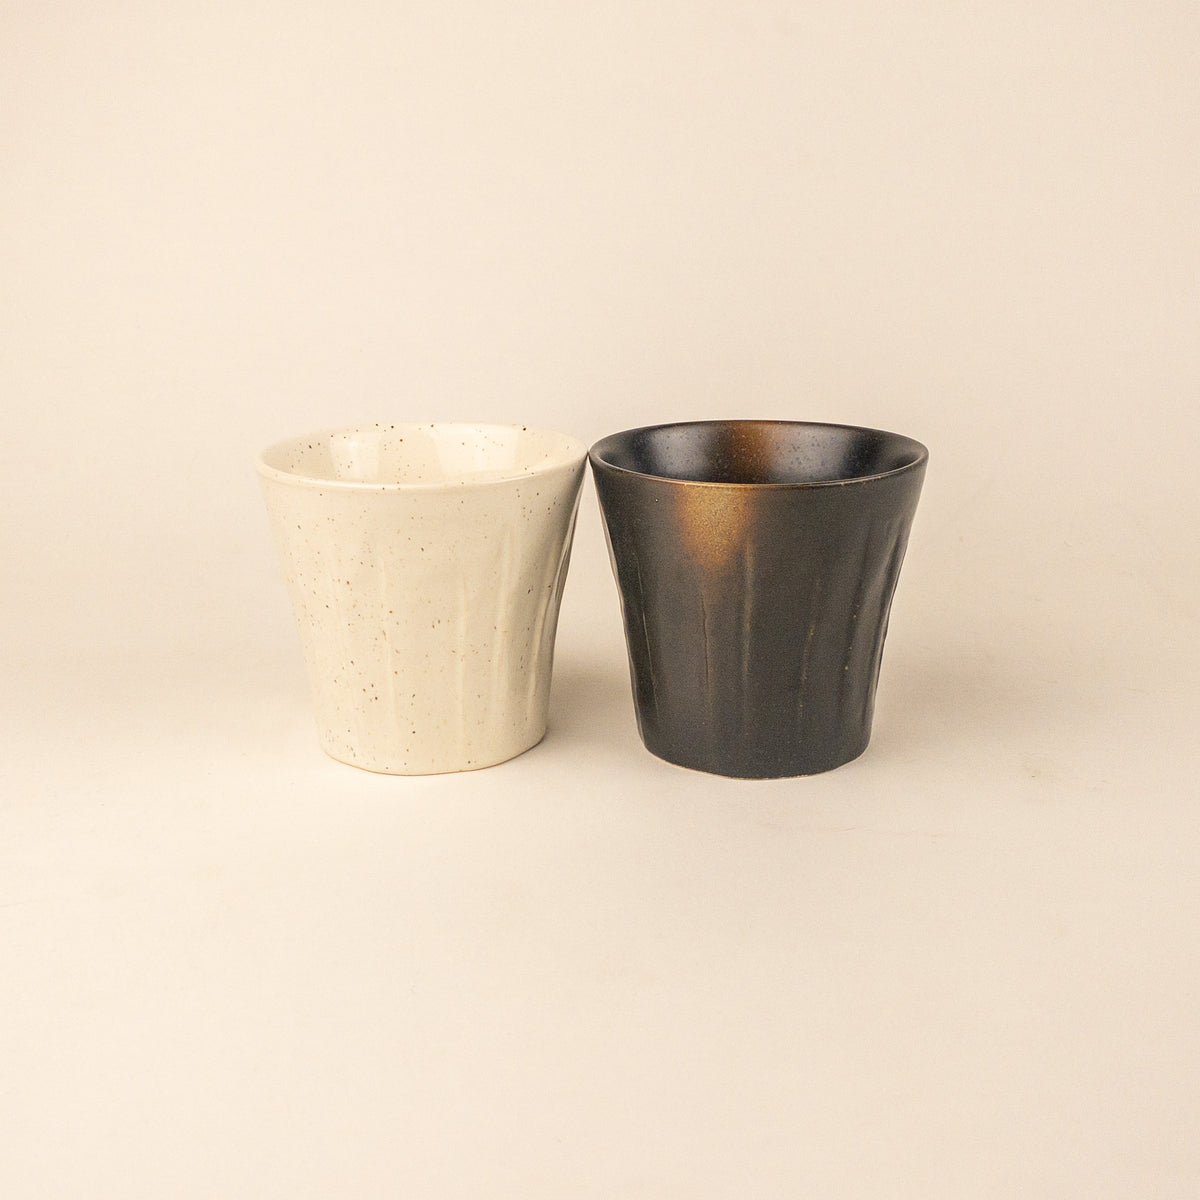 <!--3600--!>Glassware - Ceramic Sake Tumbler (set of 2)